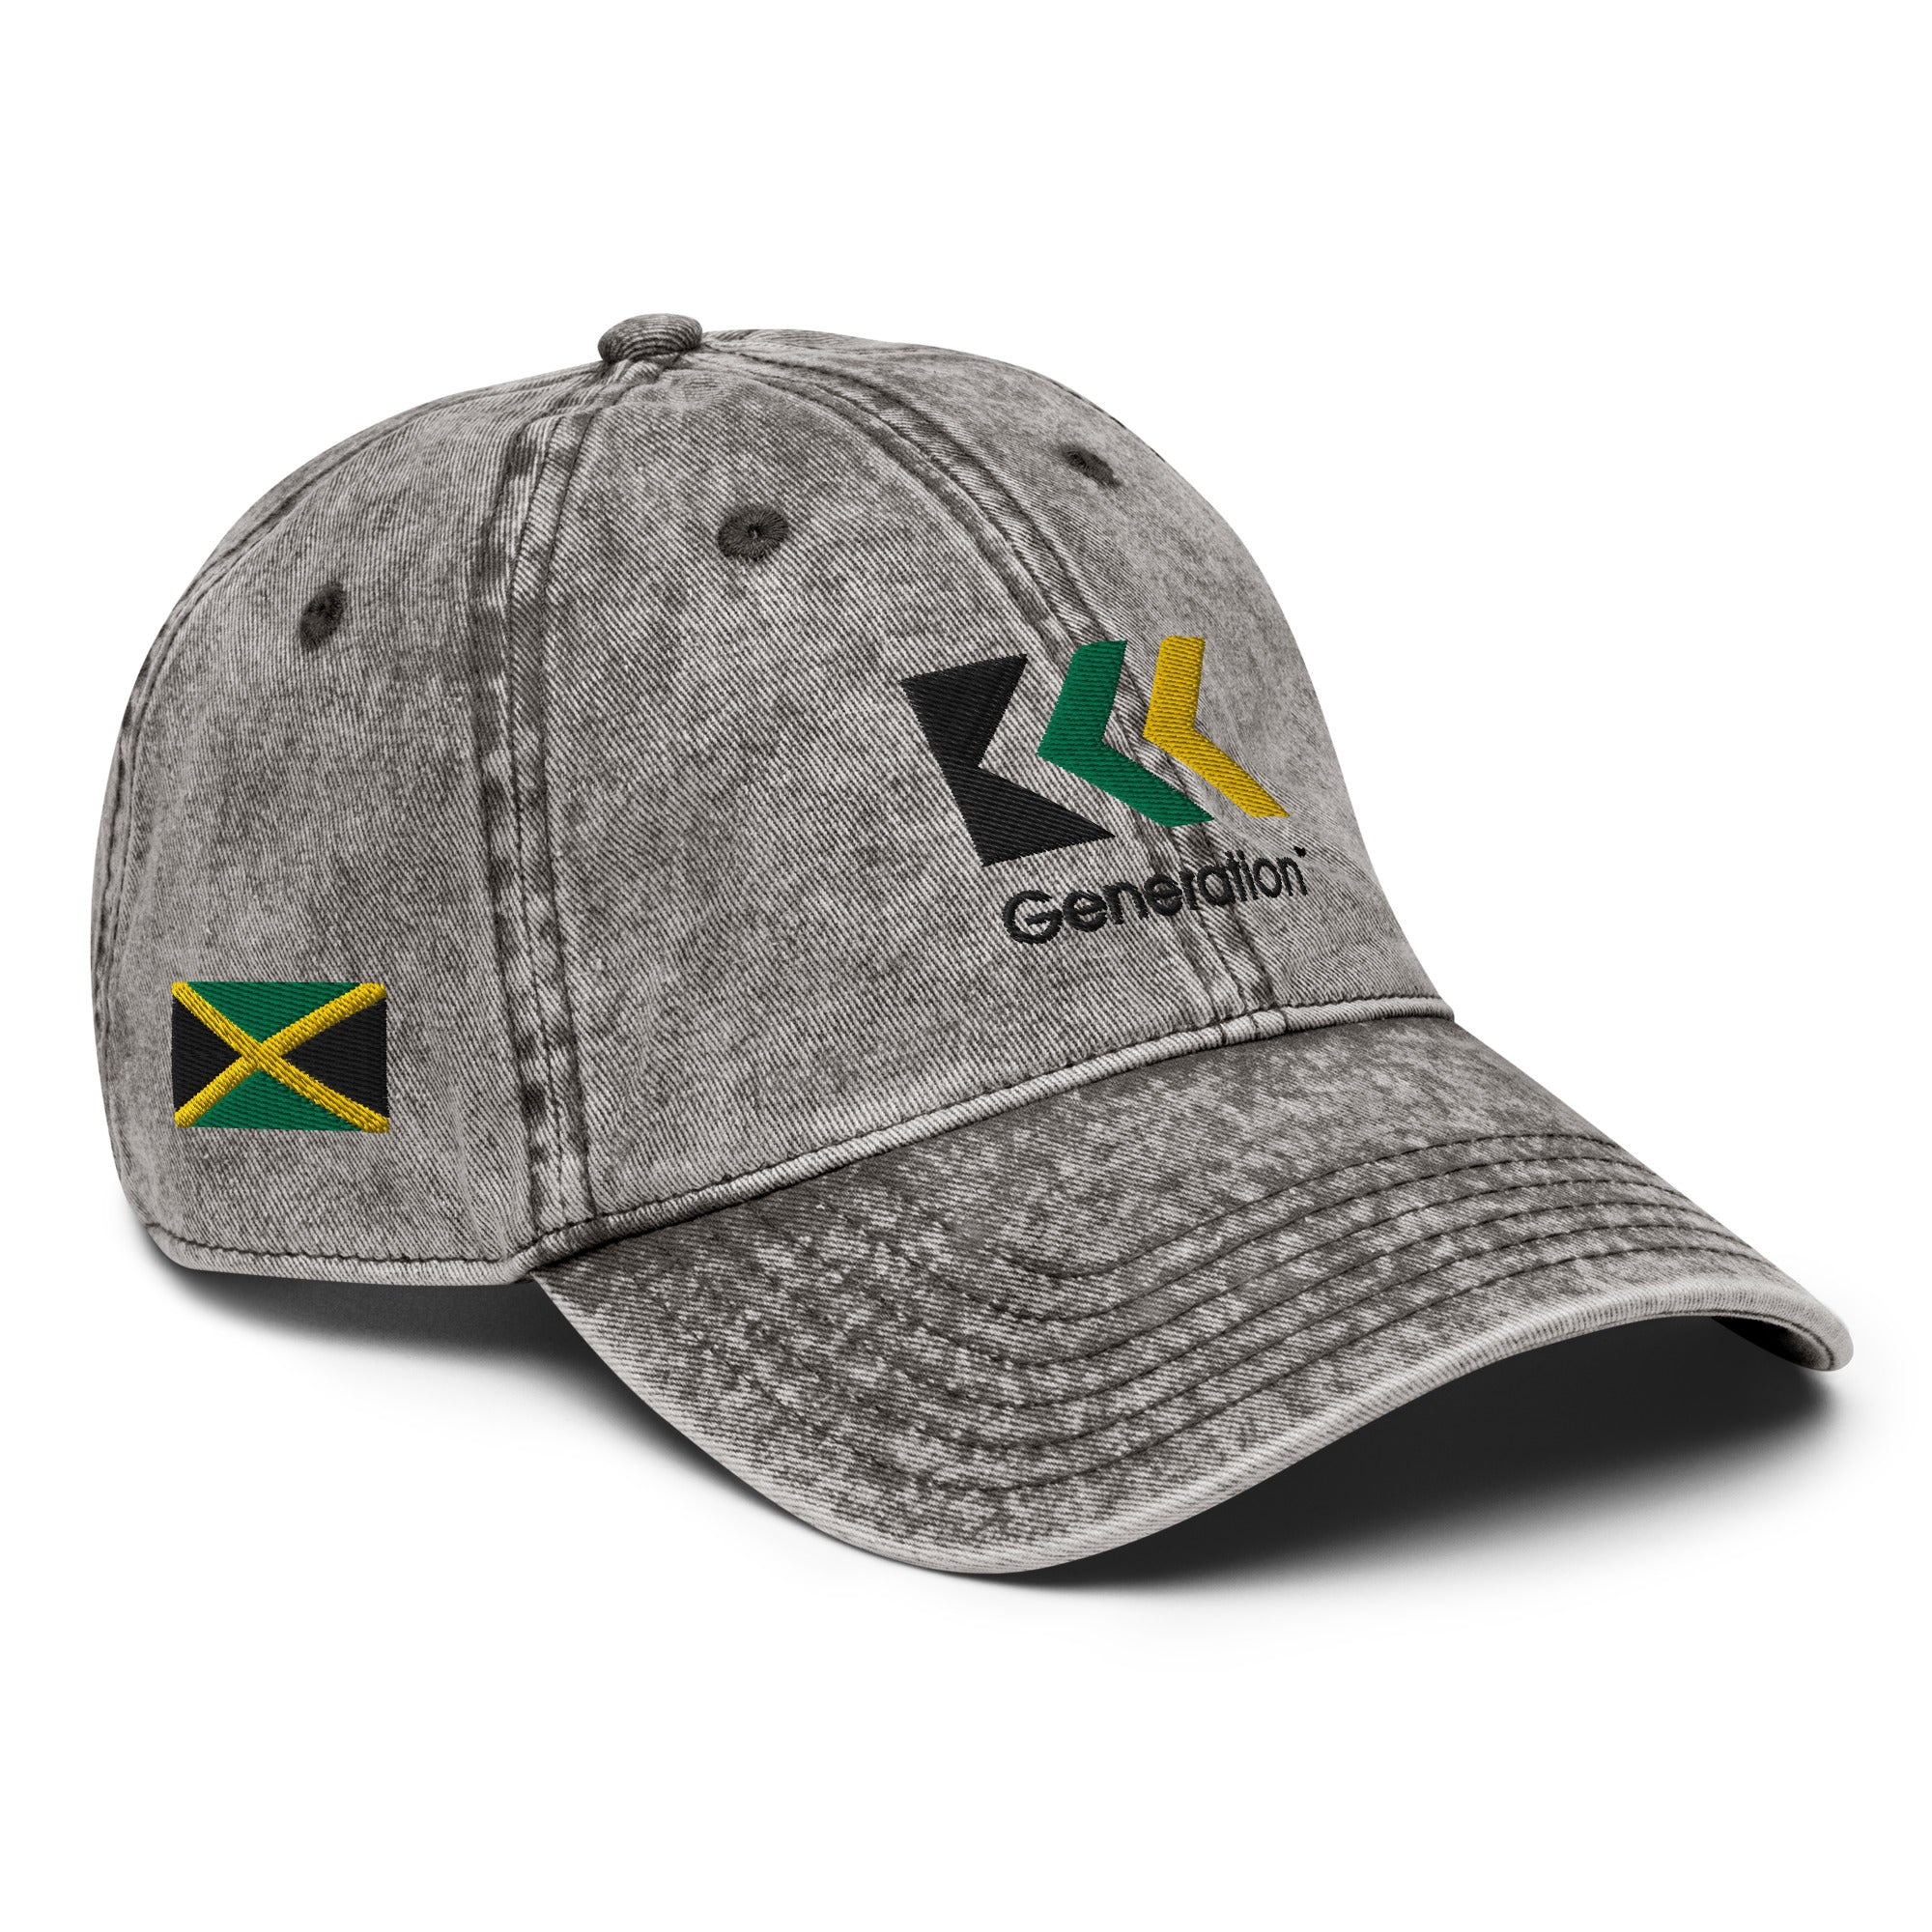 🇯🇲 Jamaica Vintage Cotton Twill Cap